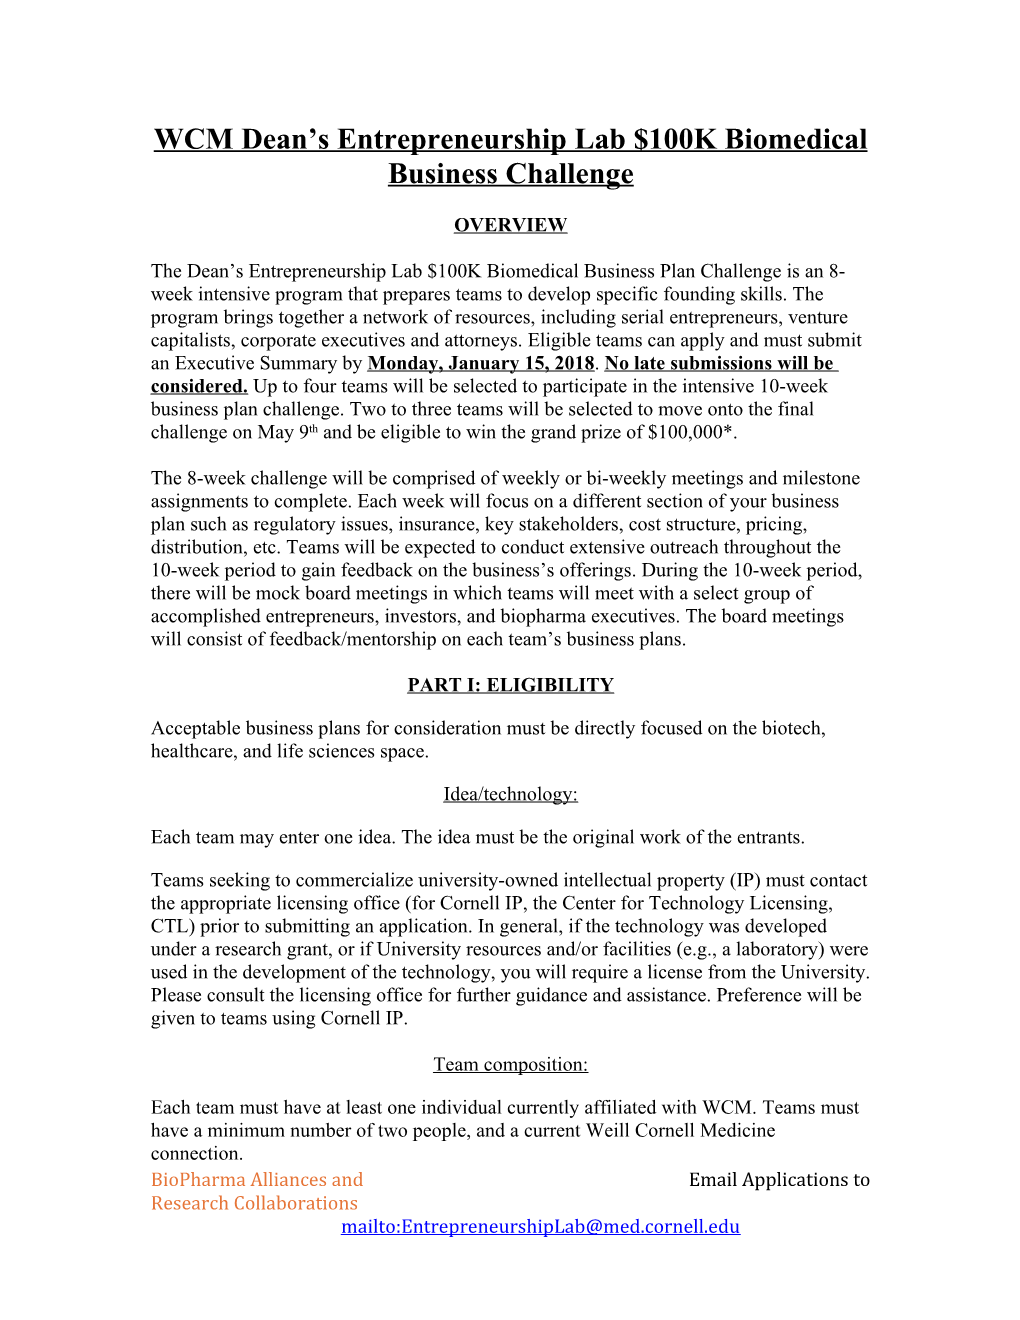 WCM Dean S Entrepreneurship Lab $100K Biomedical Business Challenge